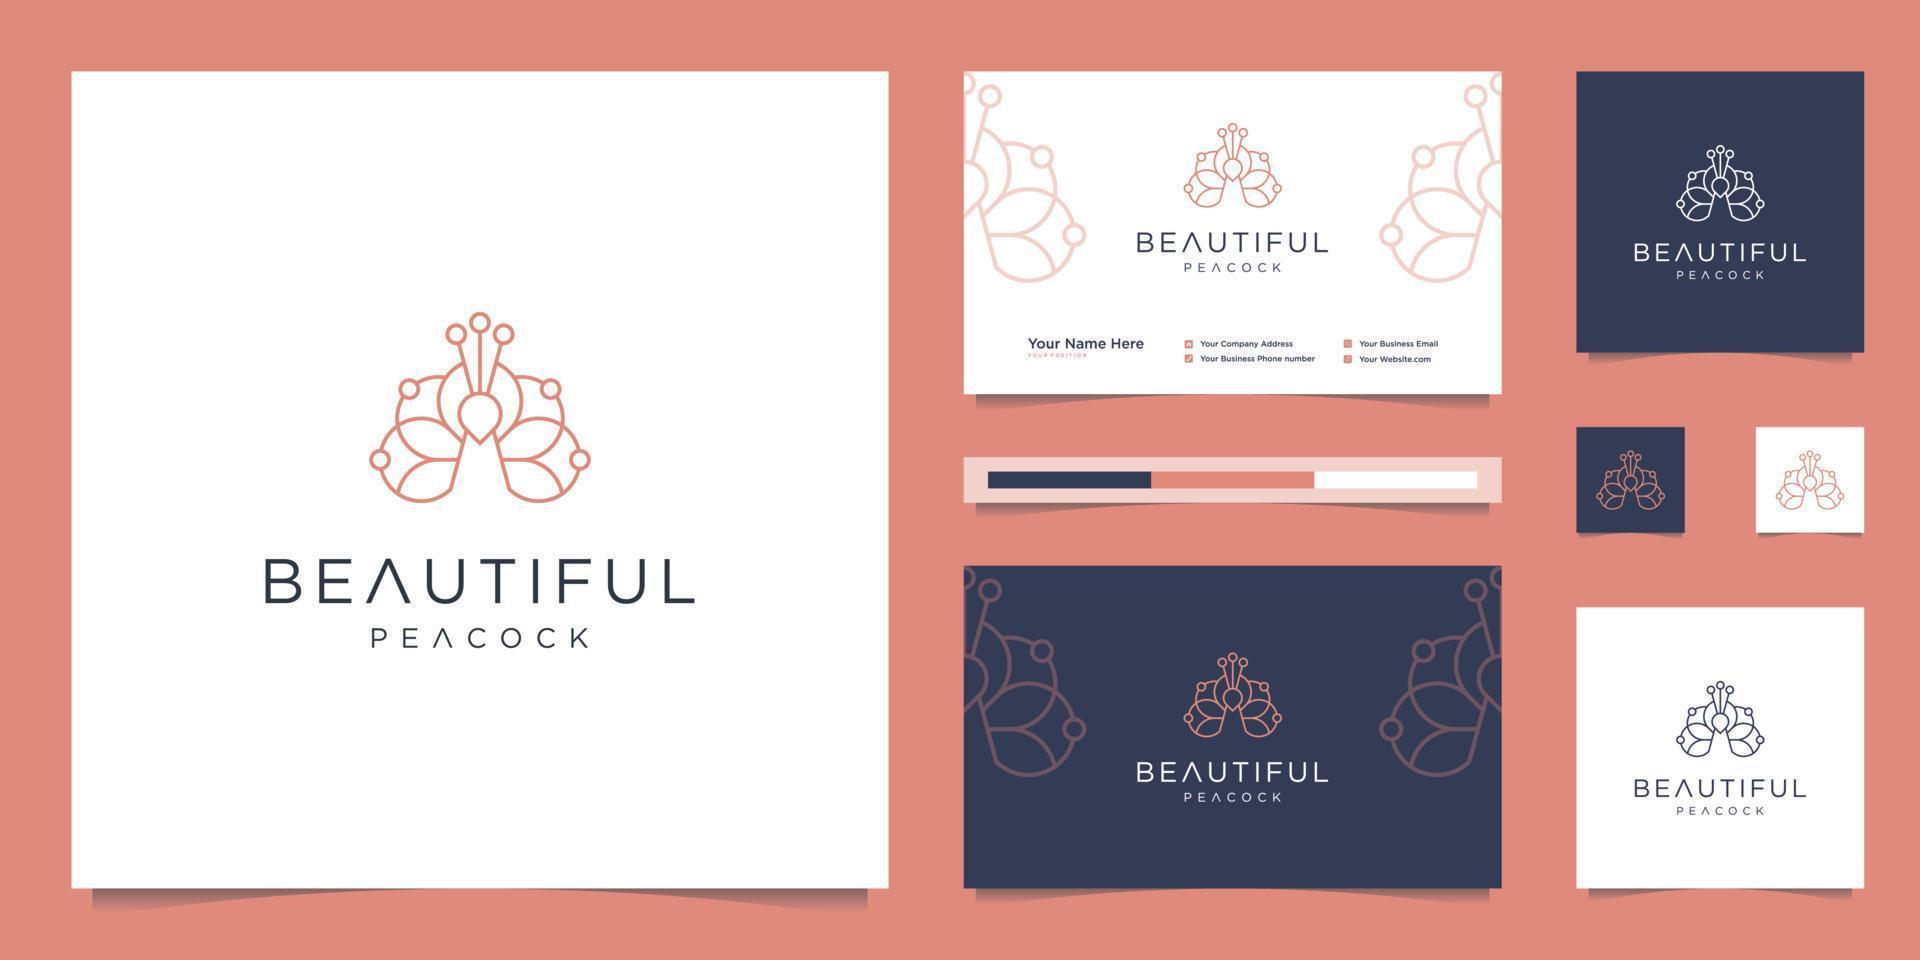 logo design beautiful peacock and business card template. minimalist luxury fashion line designs, jewelry, salon, spa. vector